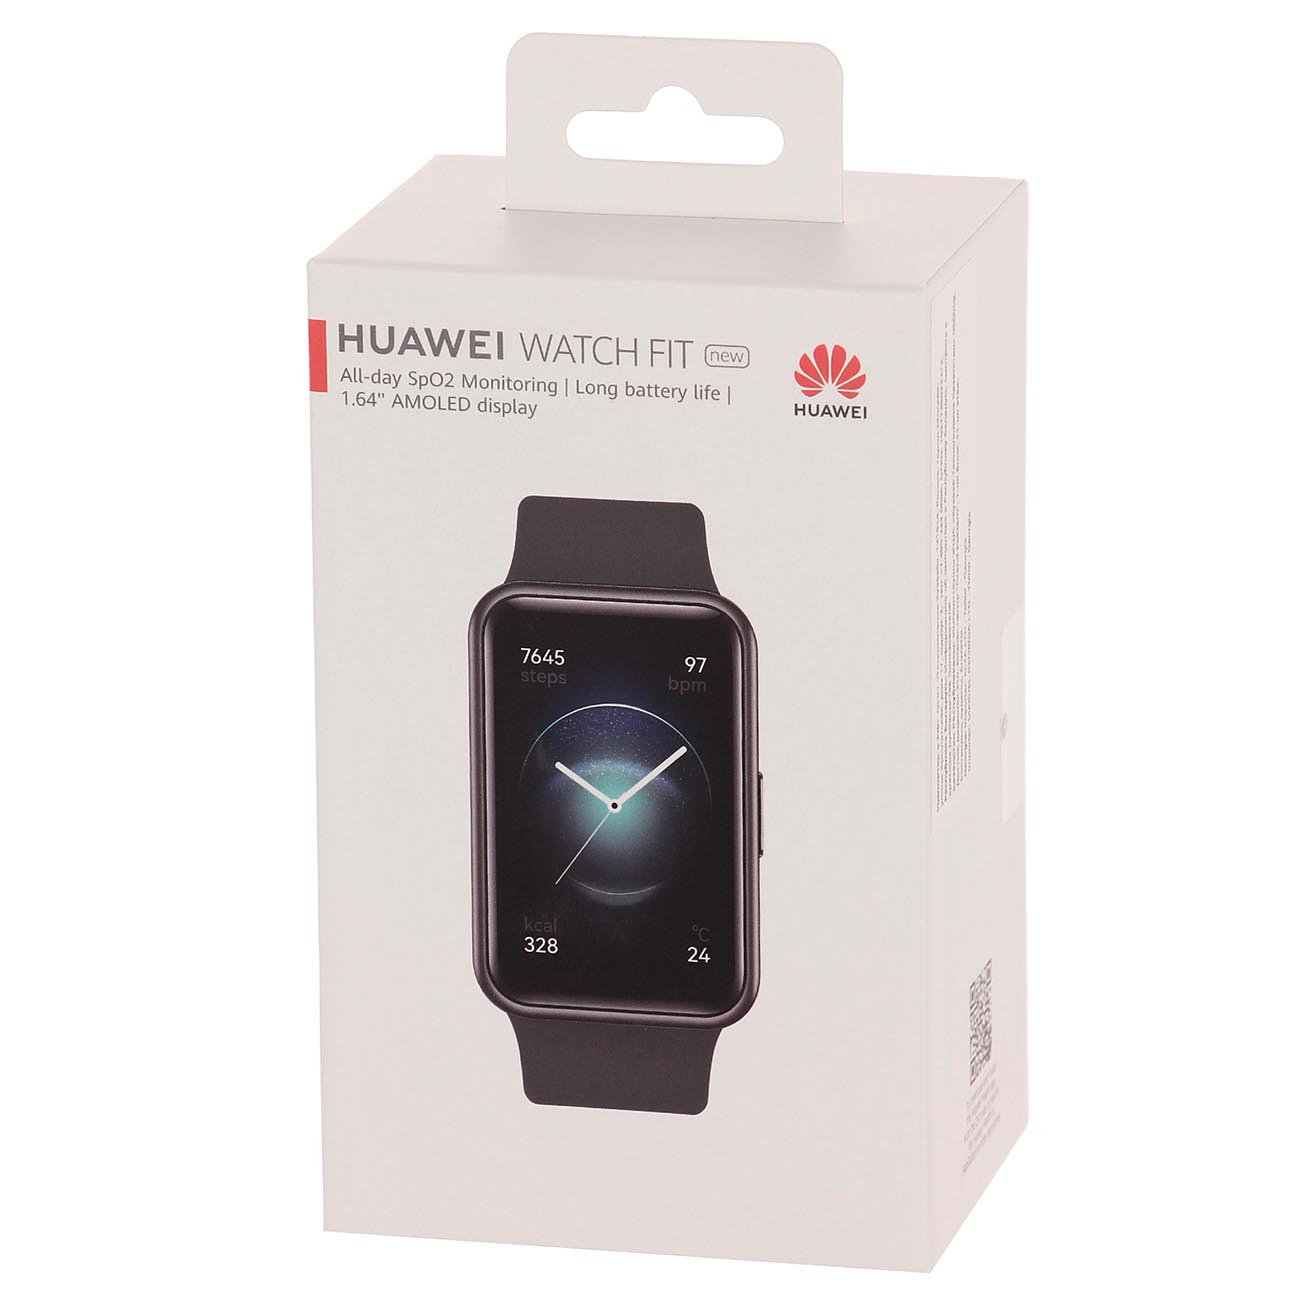 Часы huawei fit tia b09. Смарт часы Хуавей фит Tia b09. Huawei watch Fit New Graphite Black (Tia-b09). Huawei Tia-b09 смарт-часы. Смарт-часы Huawei watch Fit Graphite Black (Tia-b09).